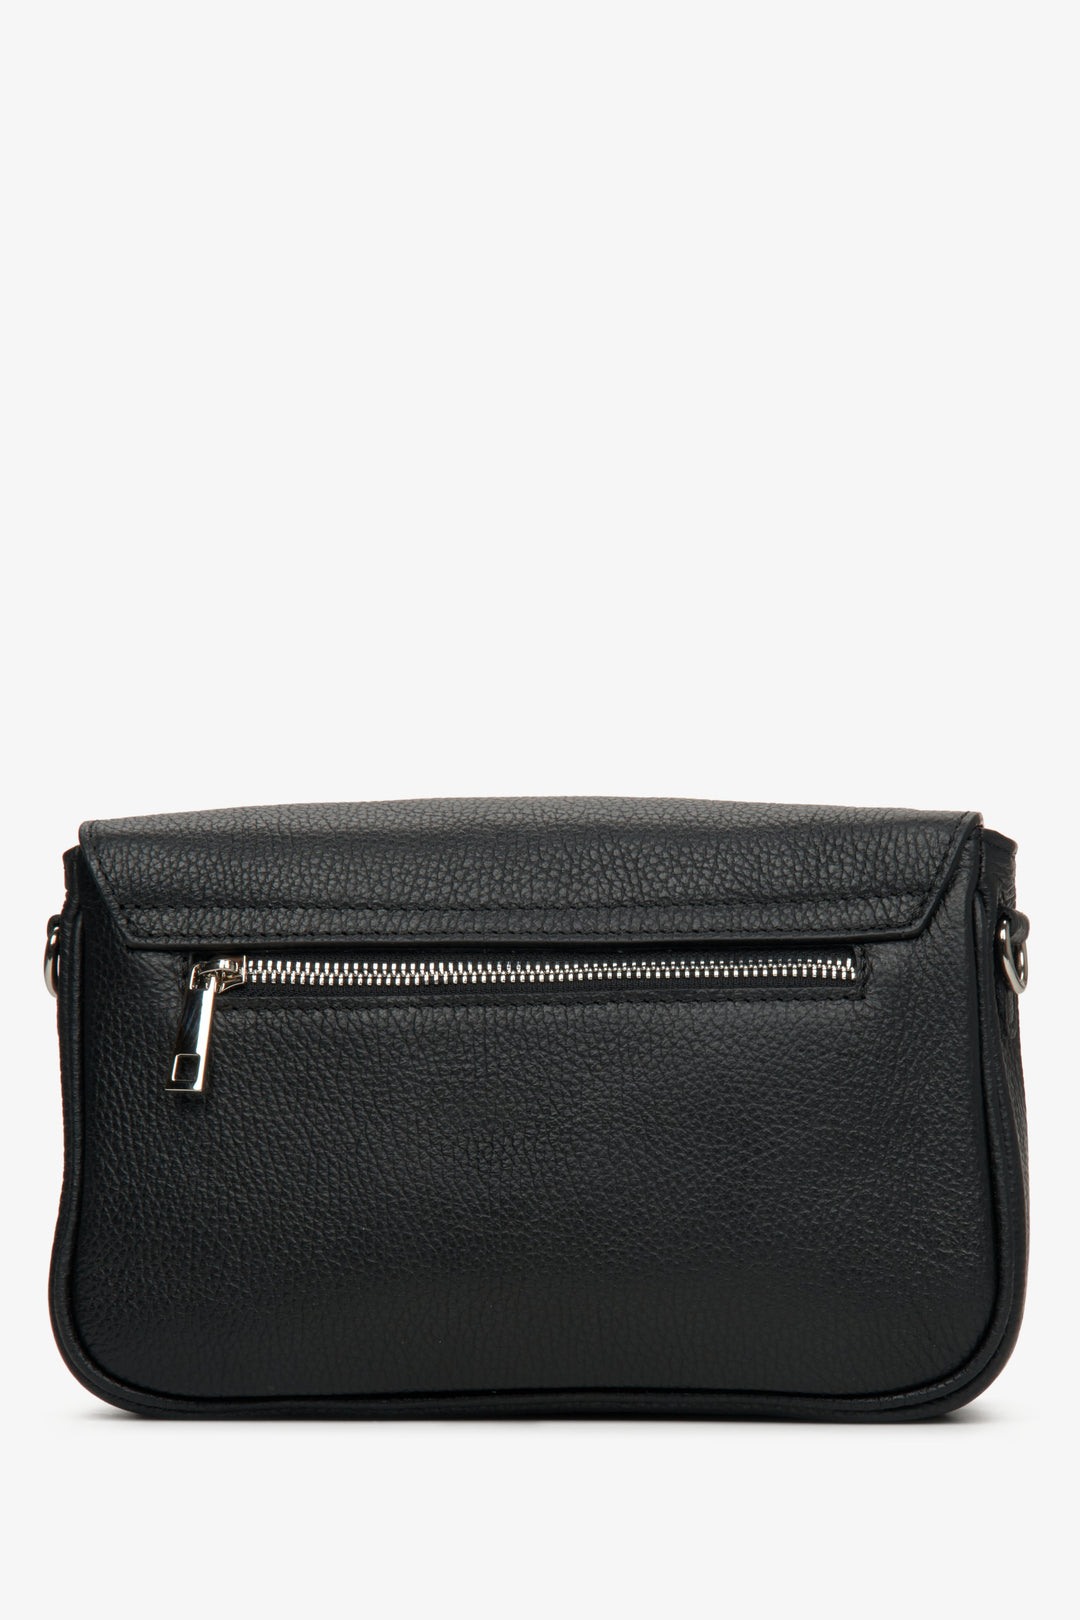 Women's leather handbag of Italian production Estro - presentation of the model in black.